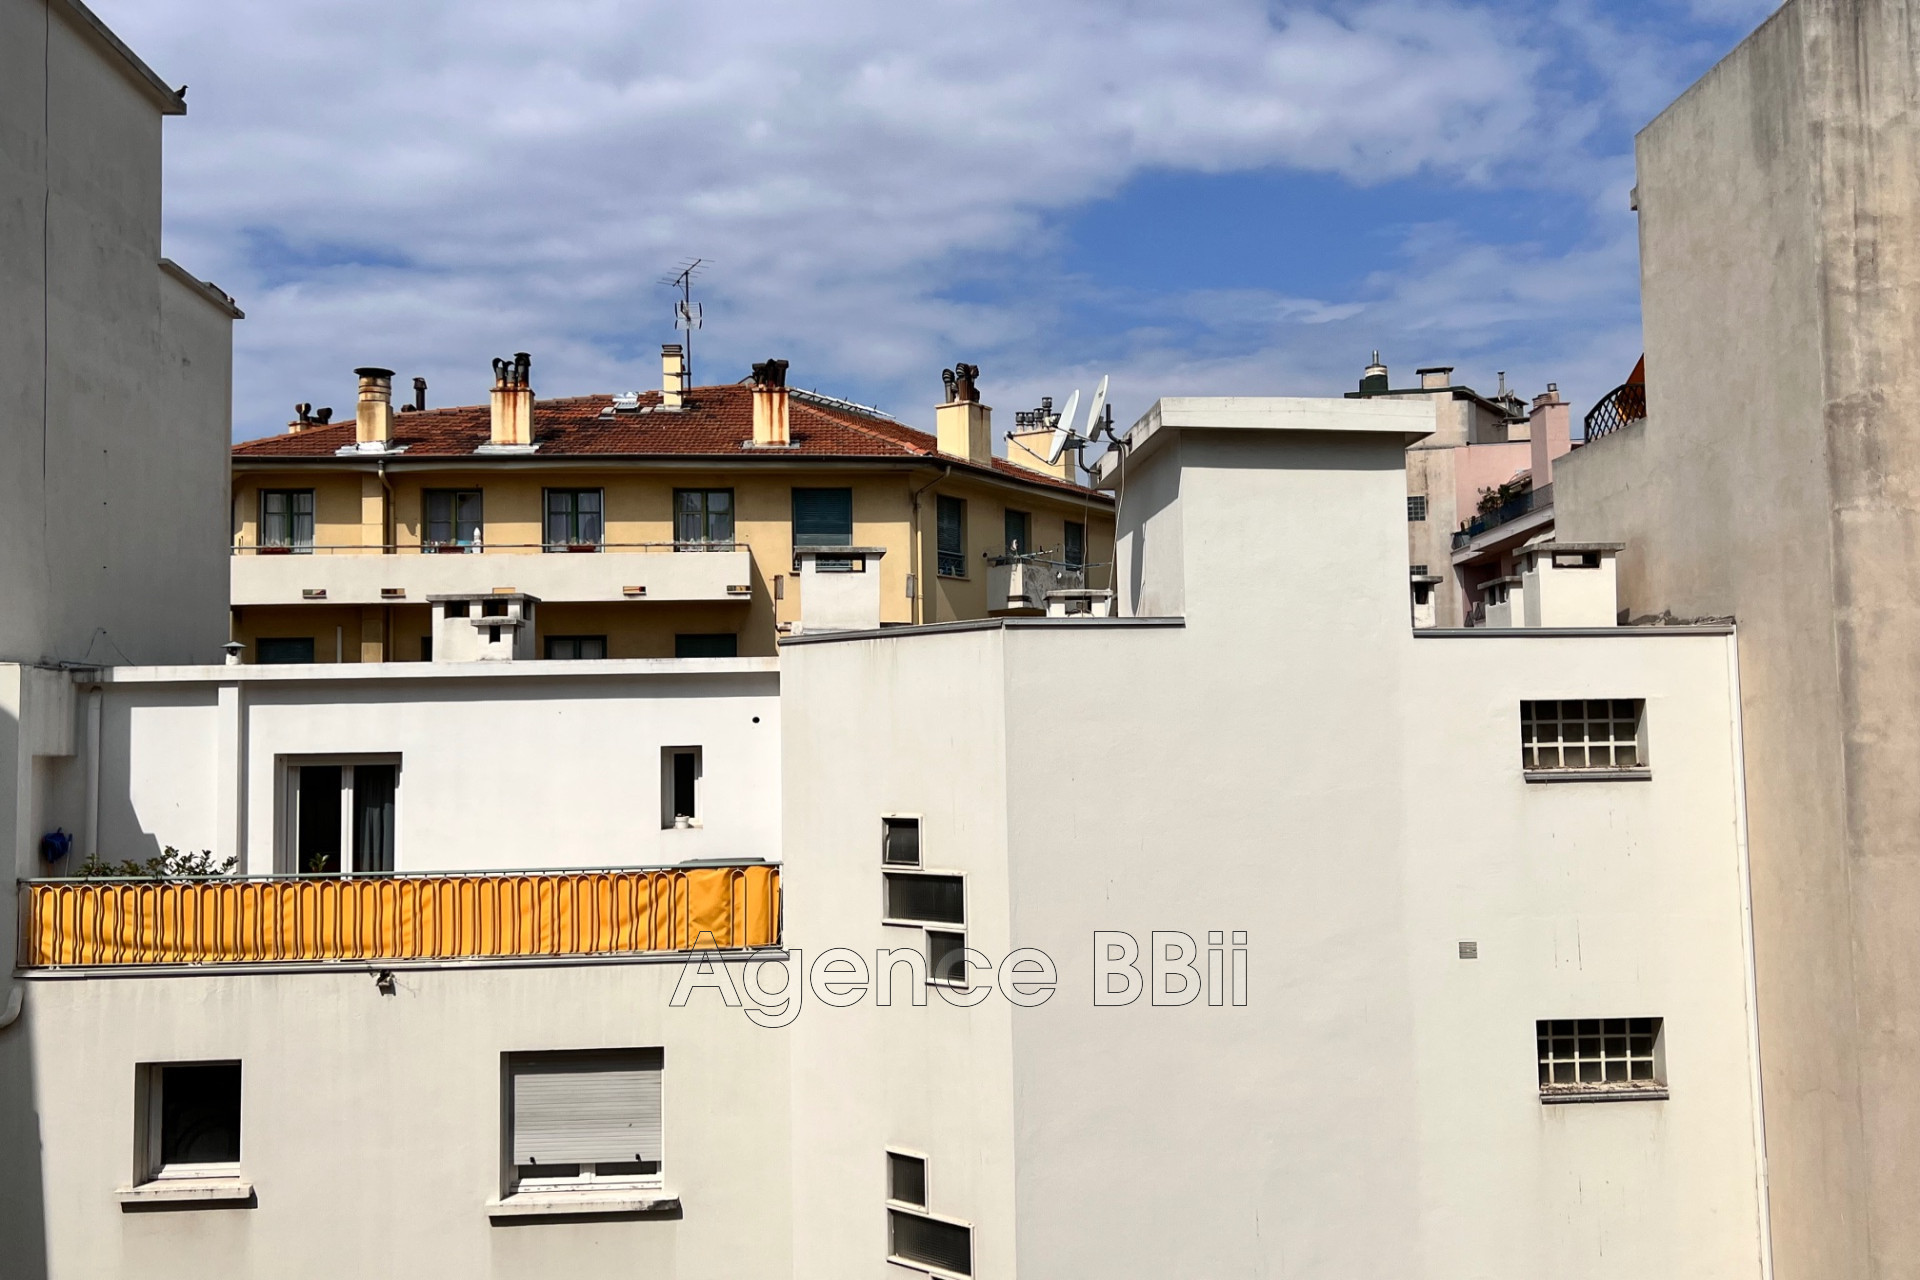 Vente Appartement 28m² 1 Pièce à Nice (06300) - BBII